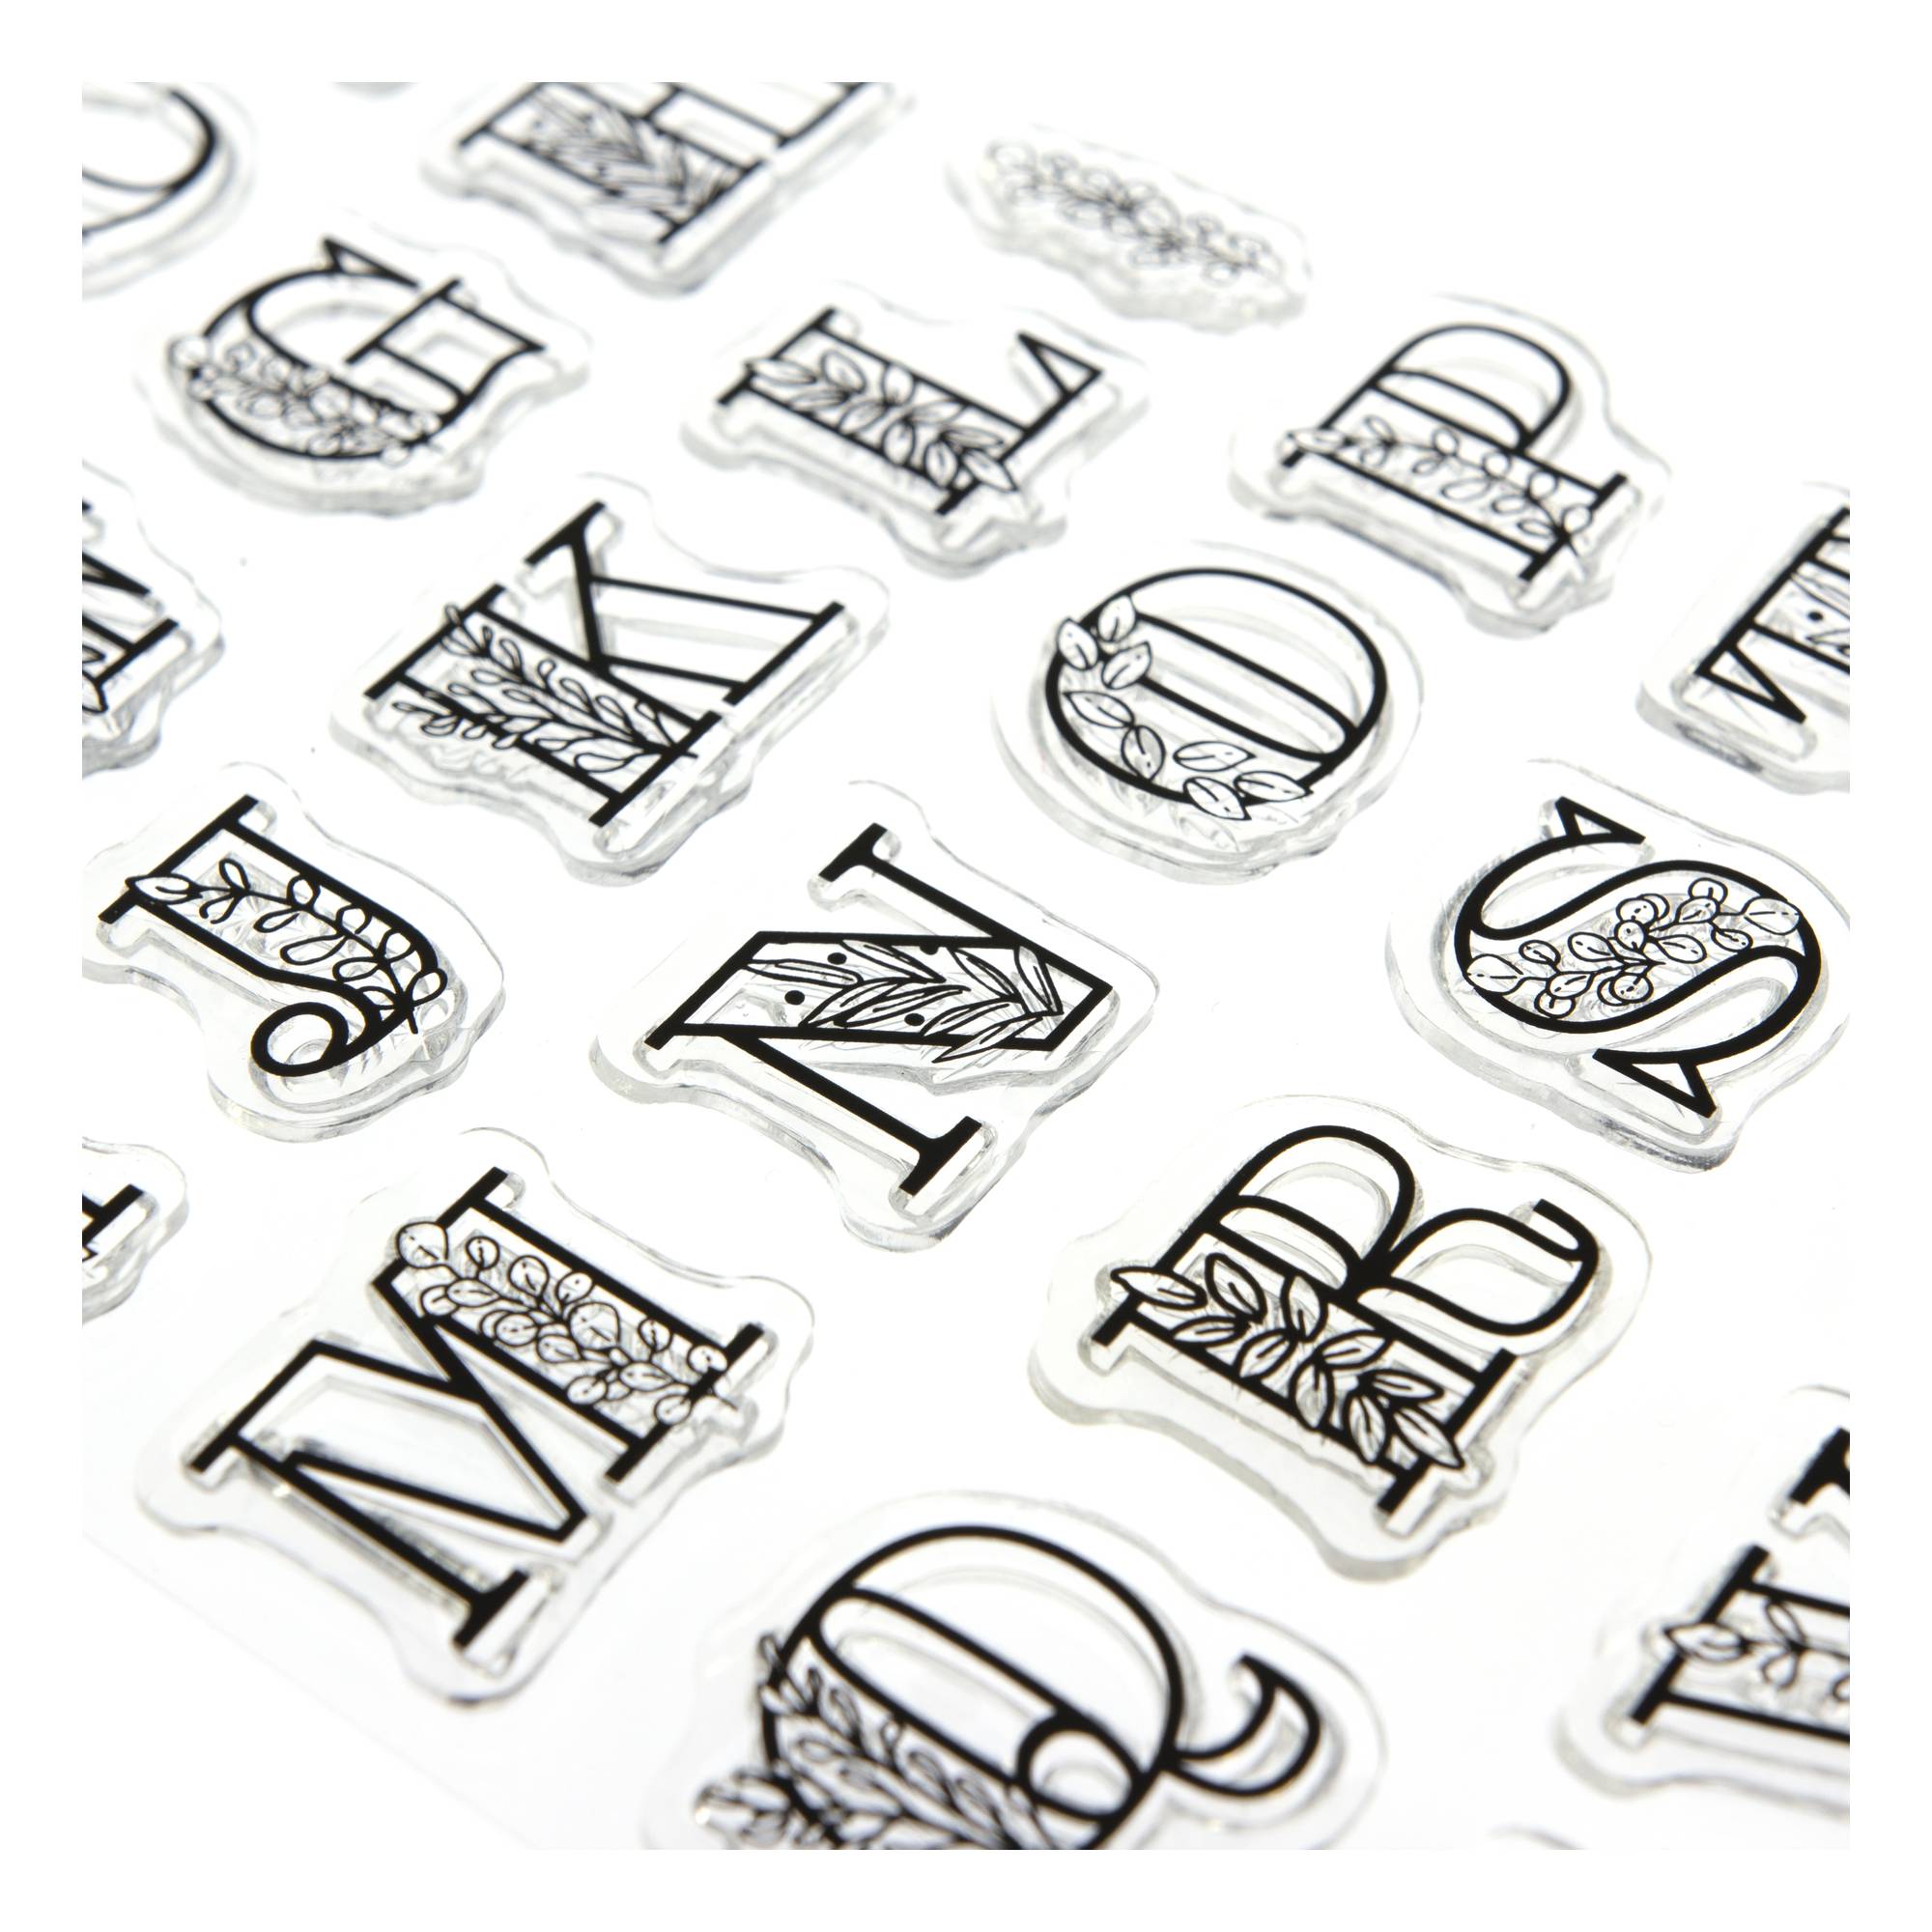 Leaf Alphabet Stamp Set 37 Pieces